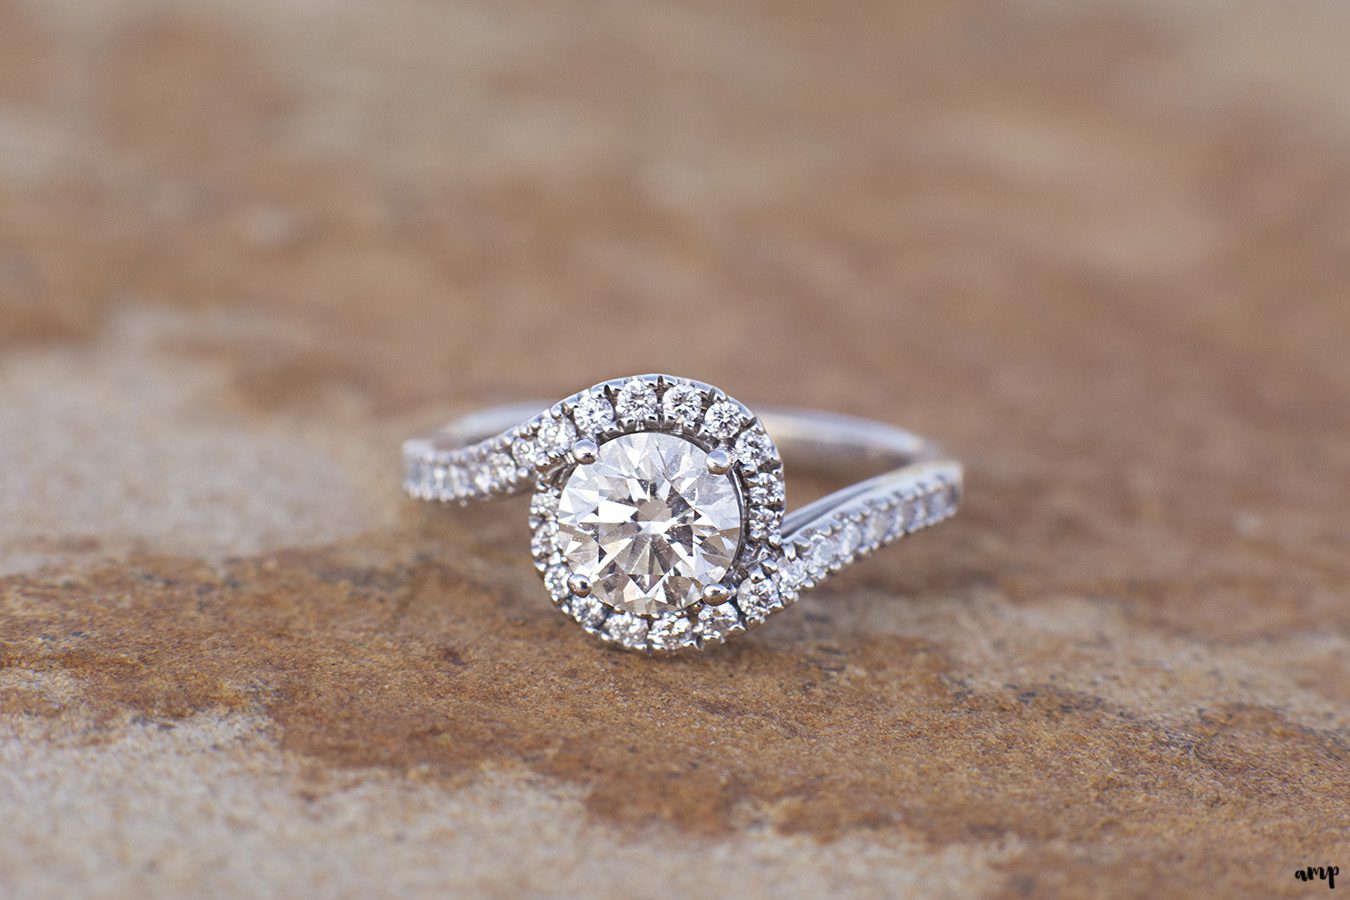 Engagement ring detail shot on red rock